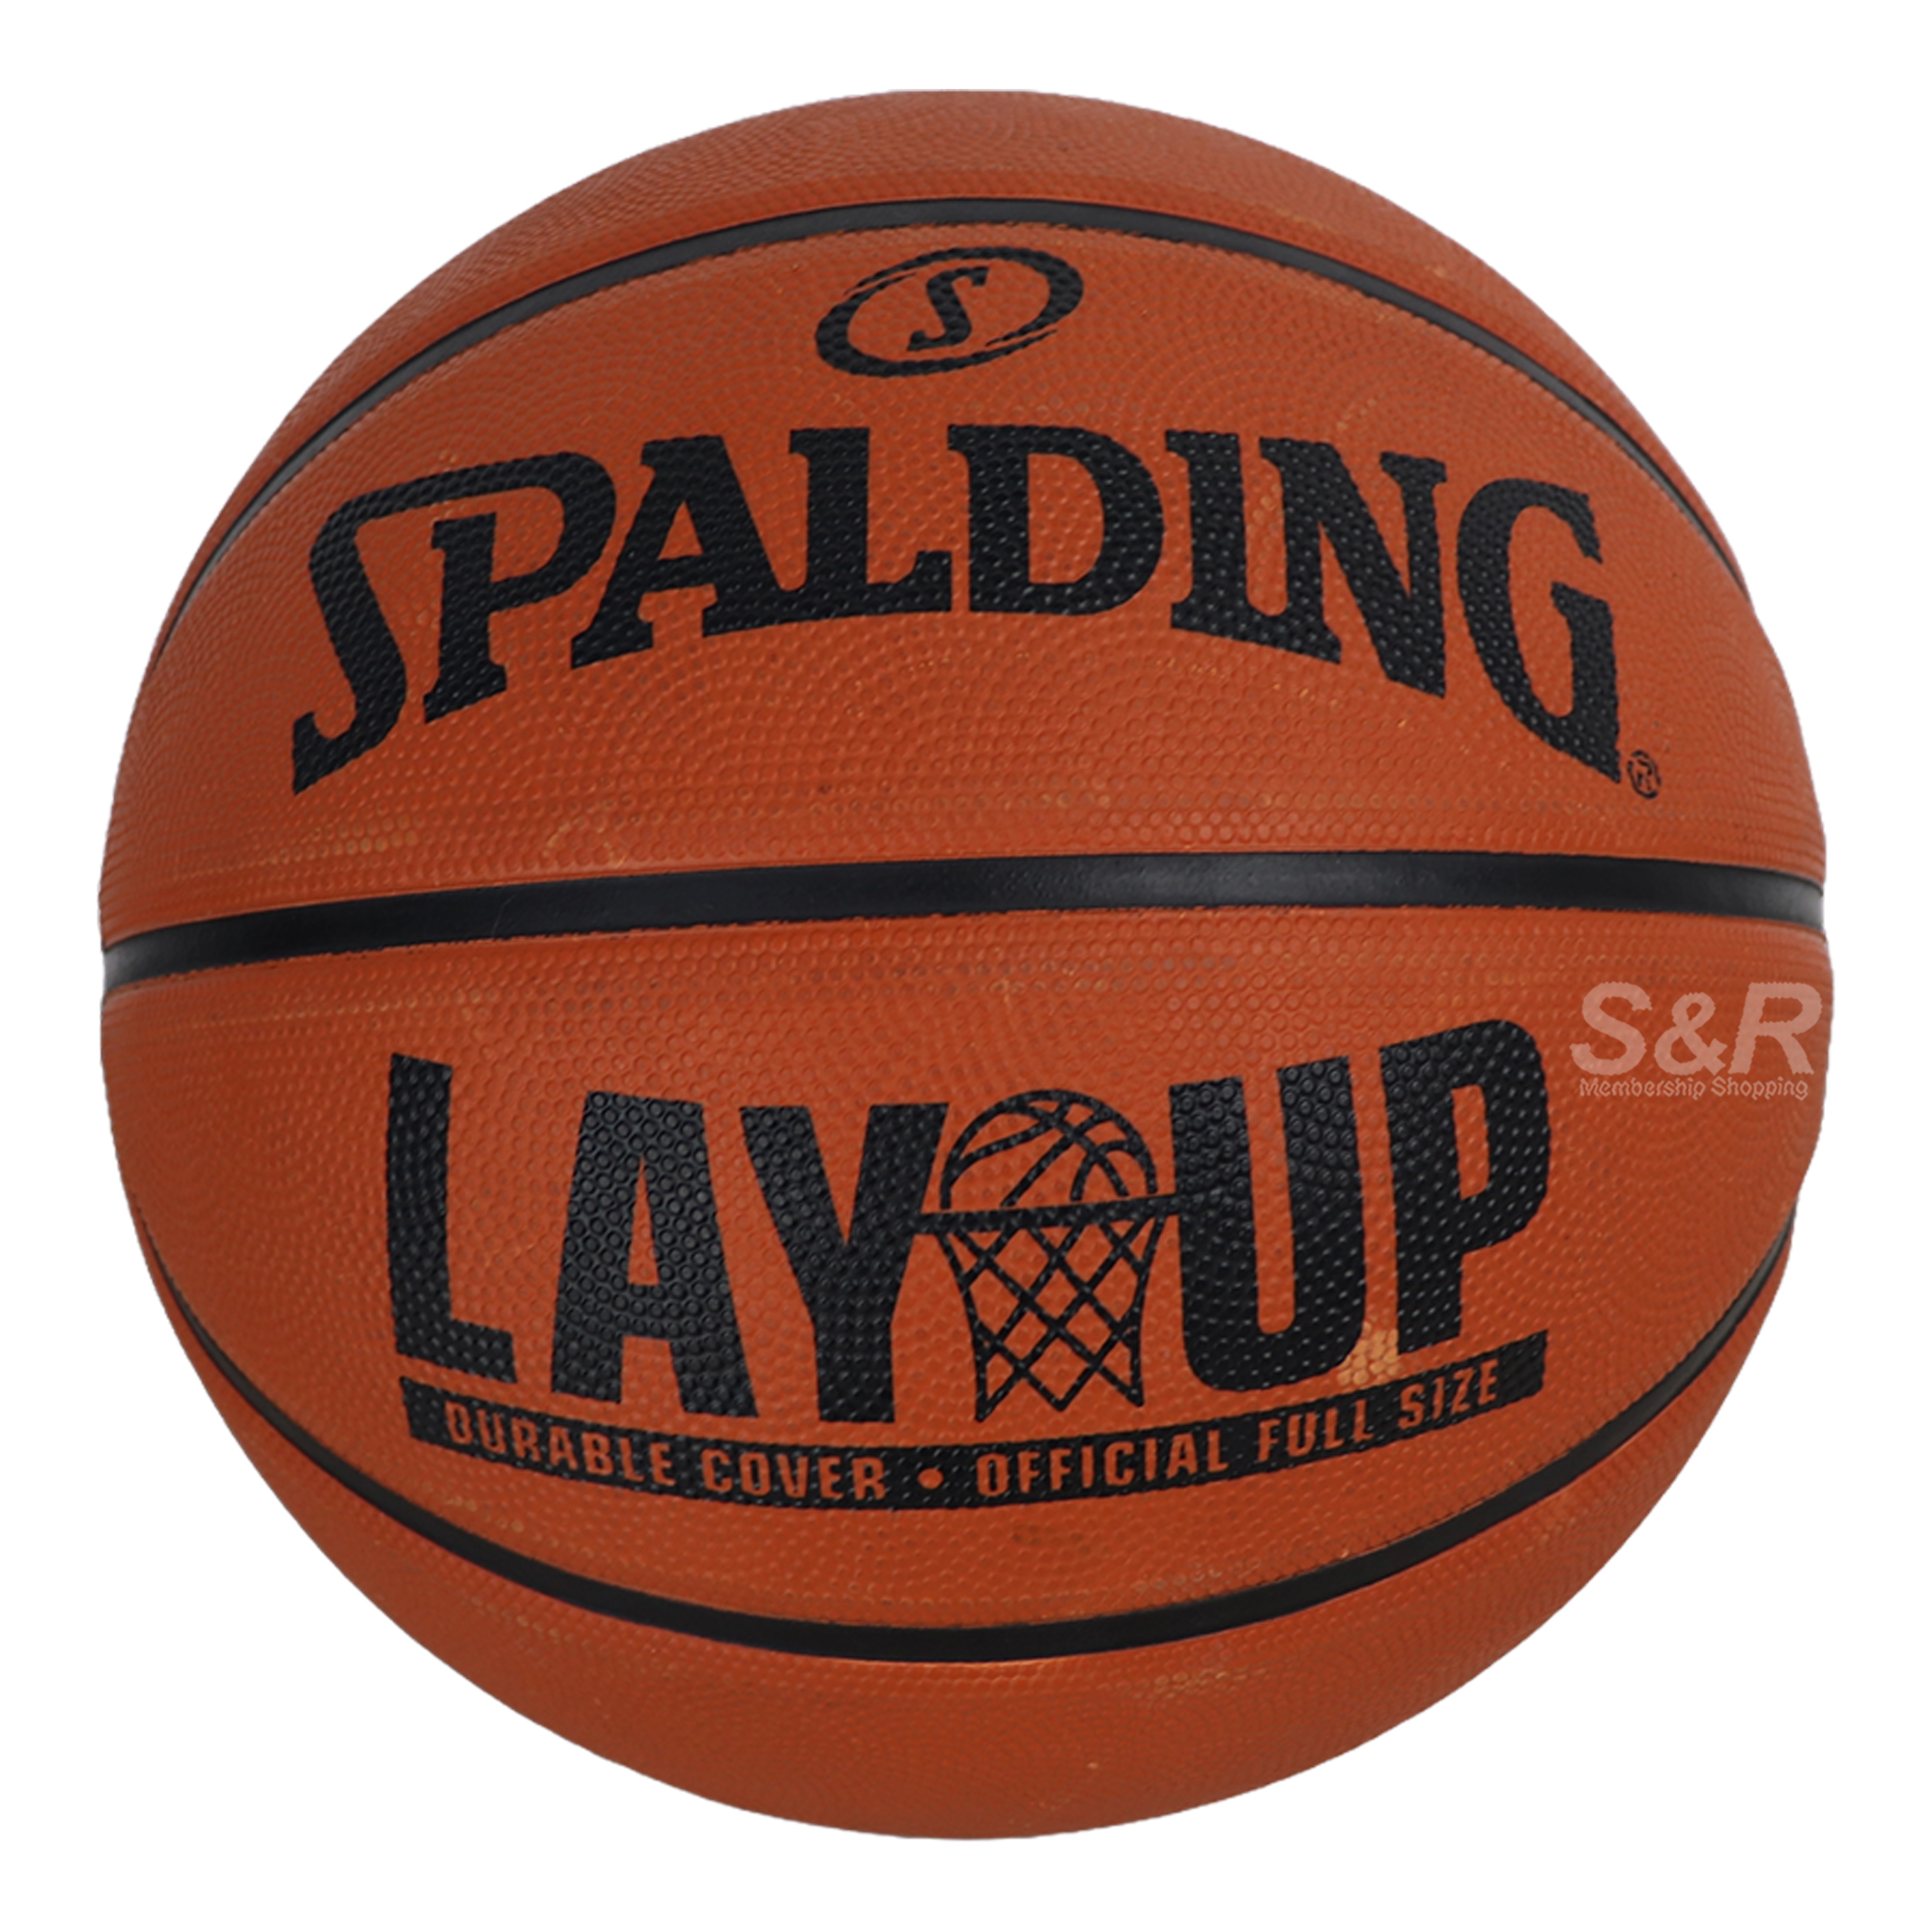 Spalding Lay-Up Basketball S7